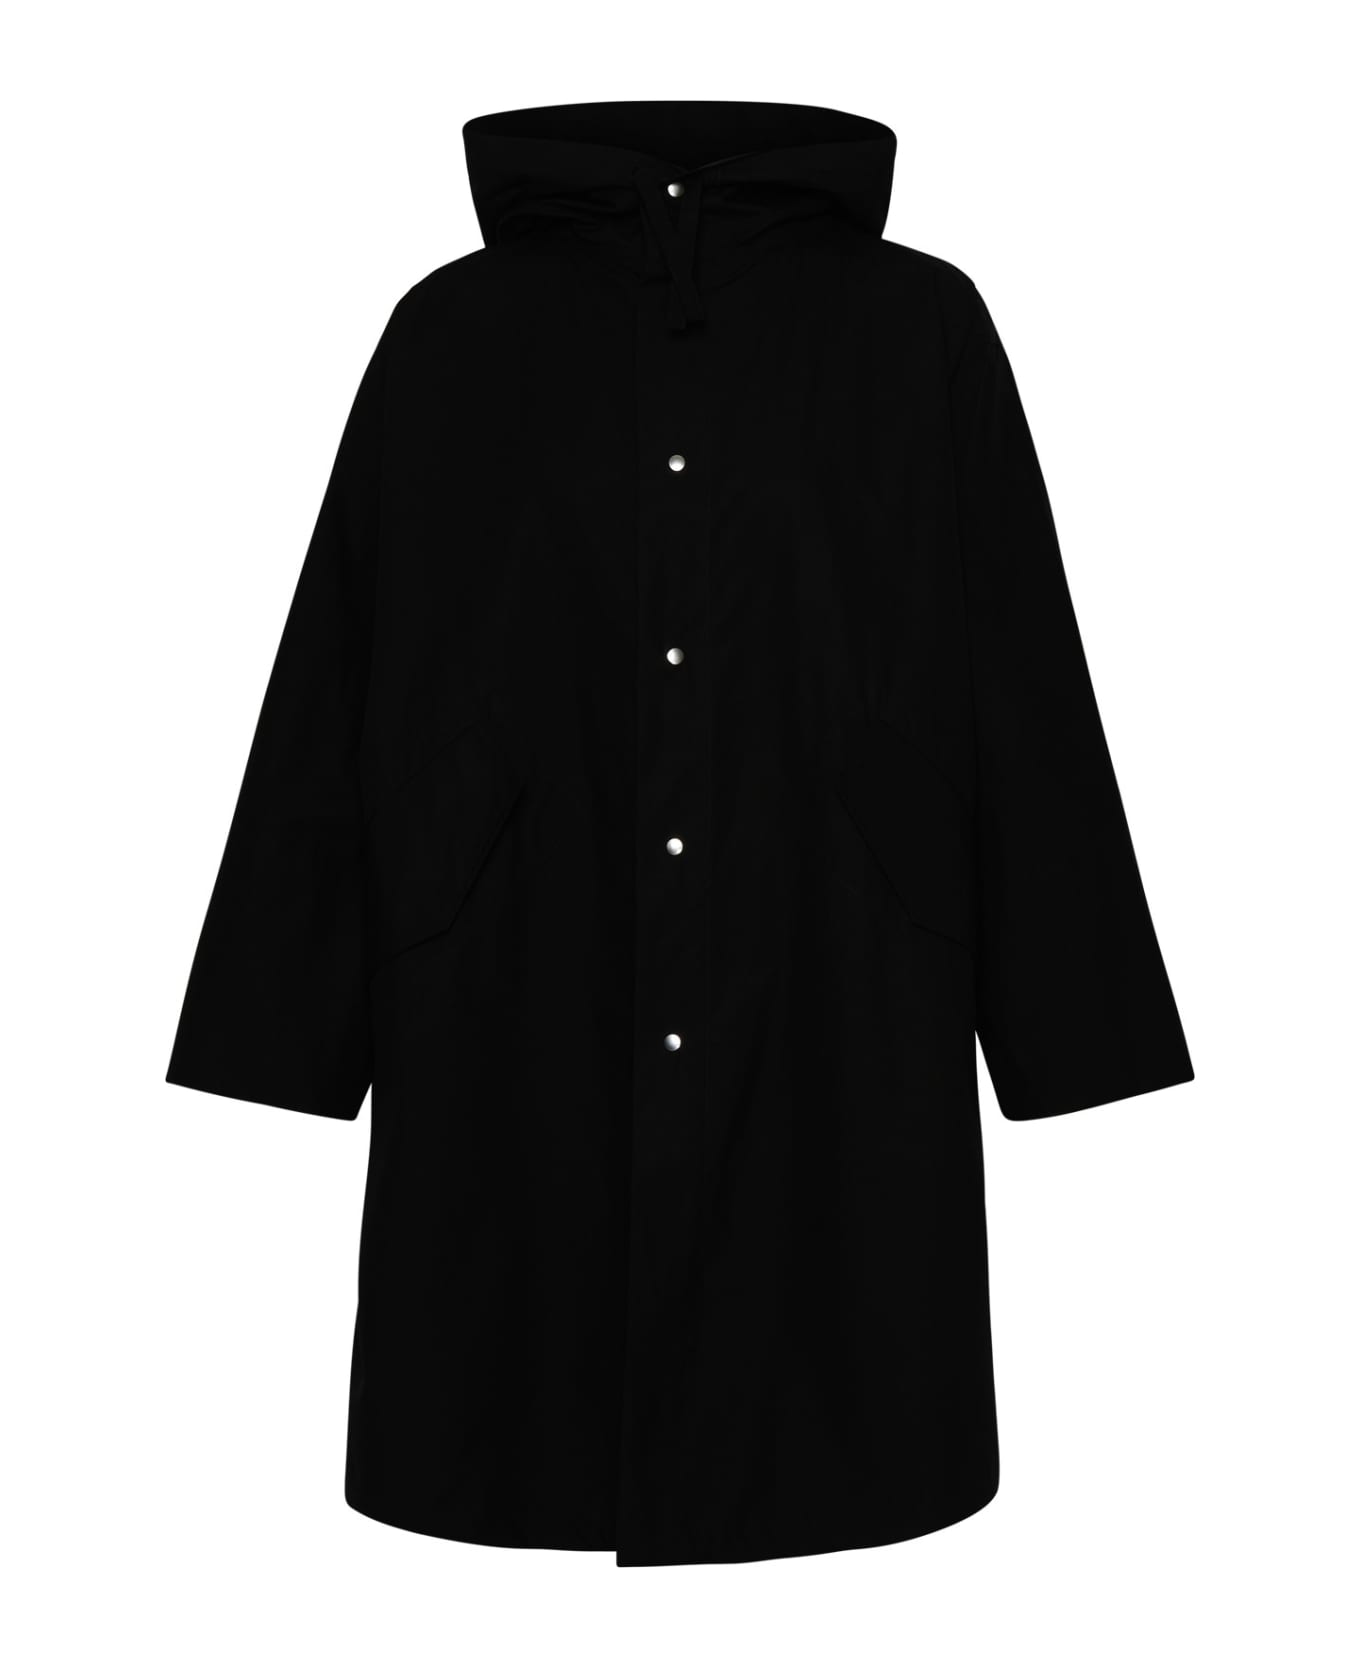 Jil Sander Navy Cotton Coat - Black